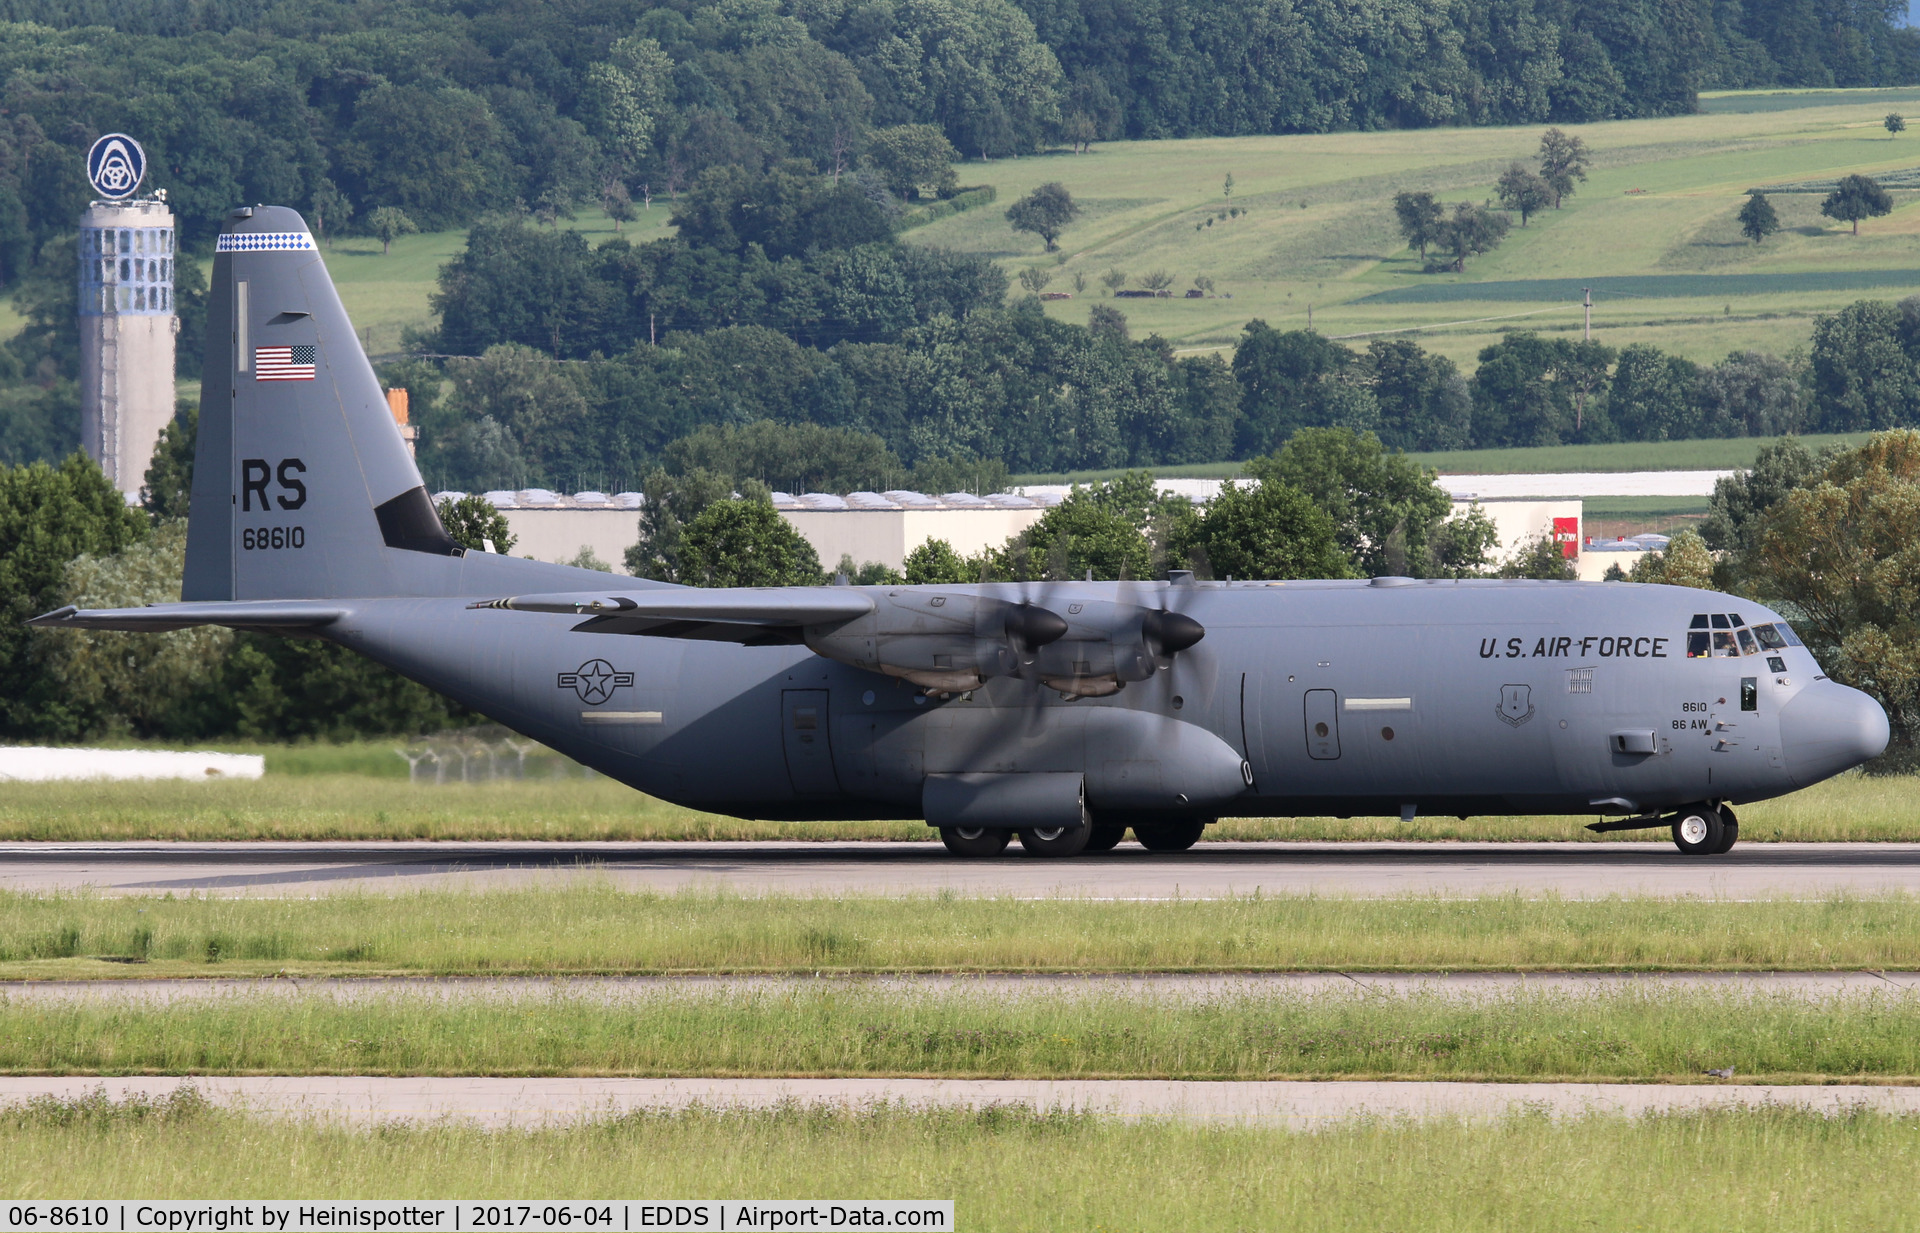 06-8610, 2006 Lockheed Martin C-130J-30 Super Hercules C/N 382-5620, 06-8610 at Stuttgart Airport.